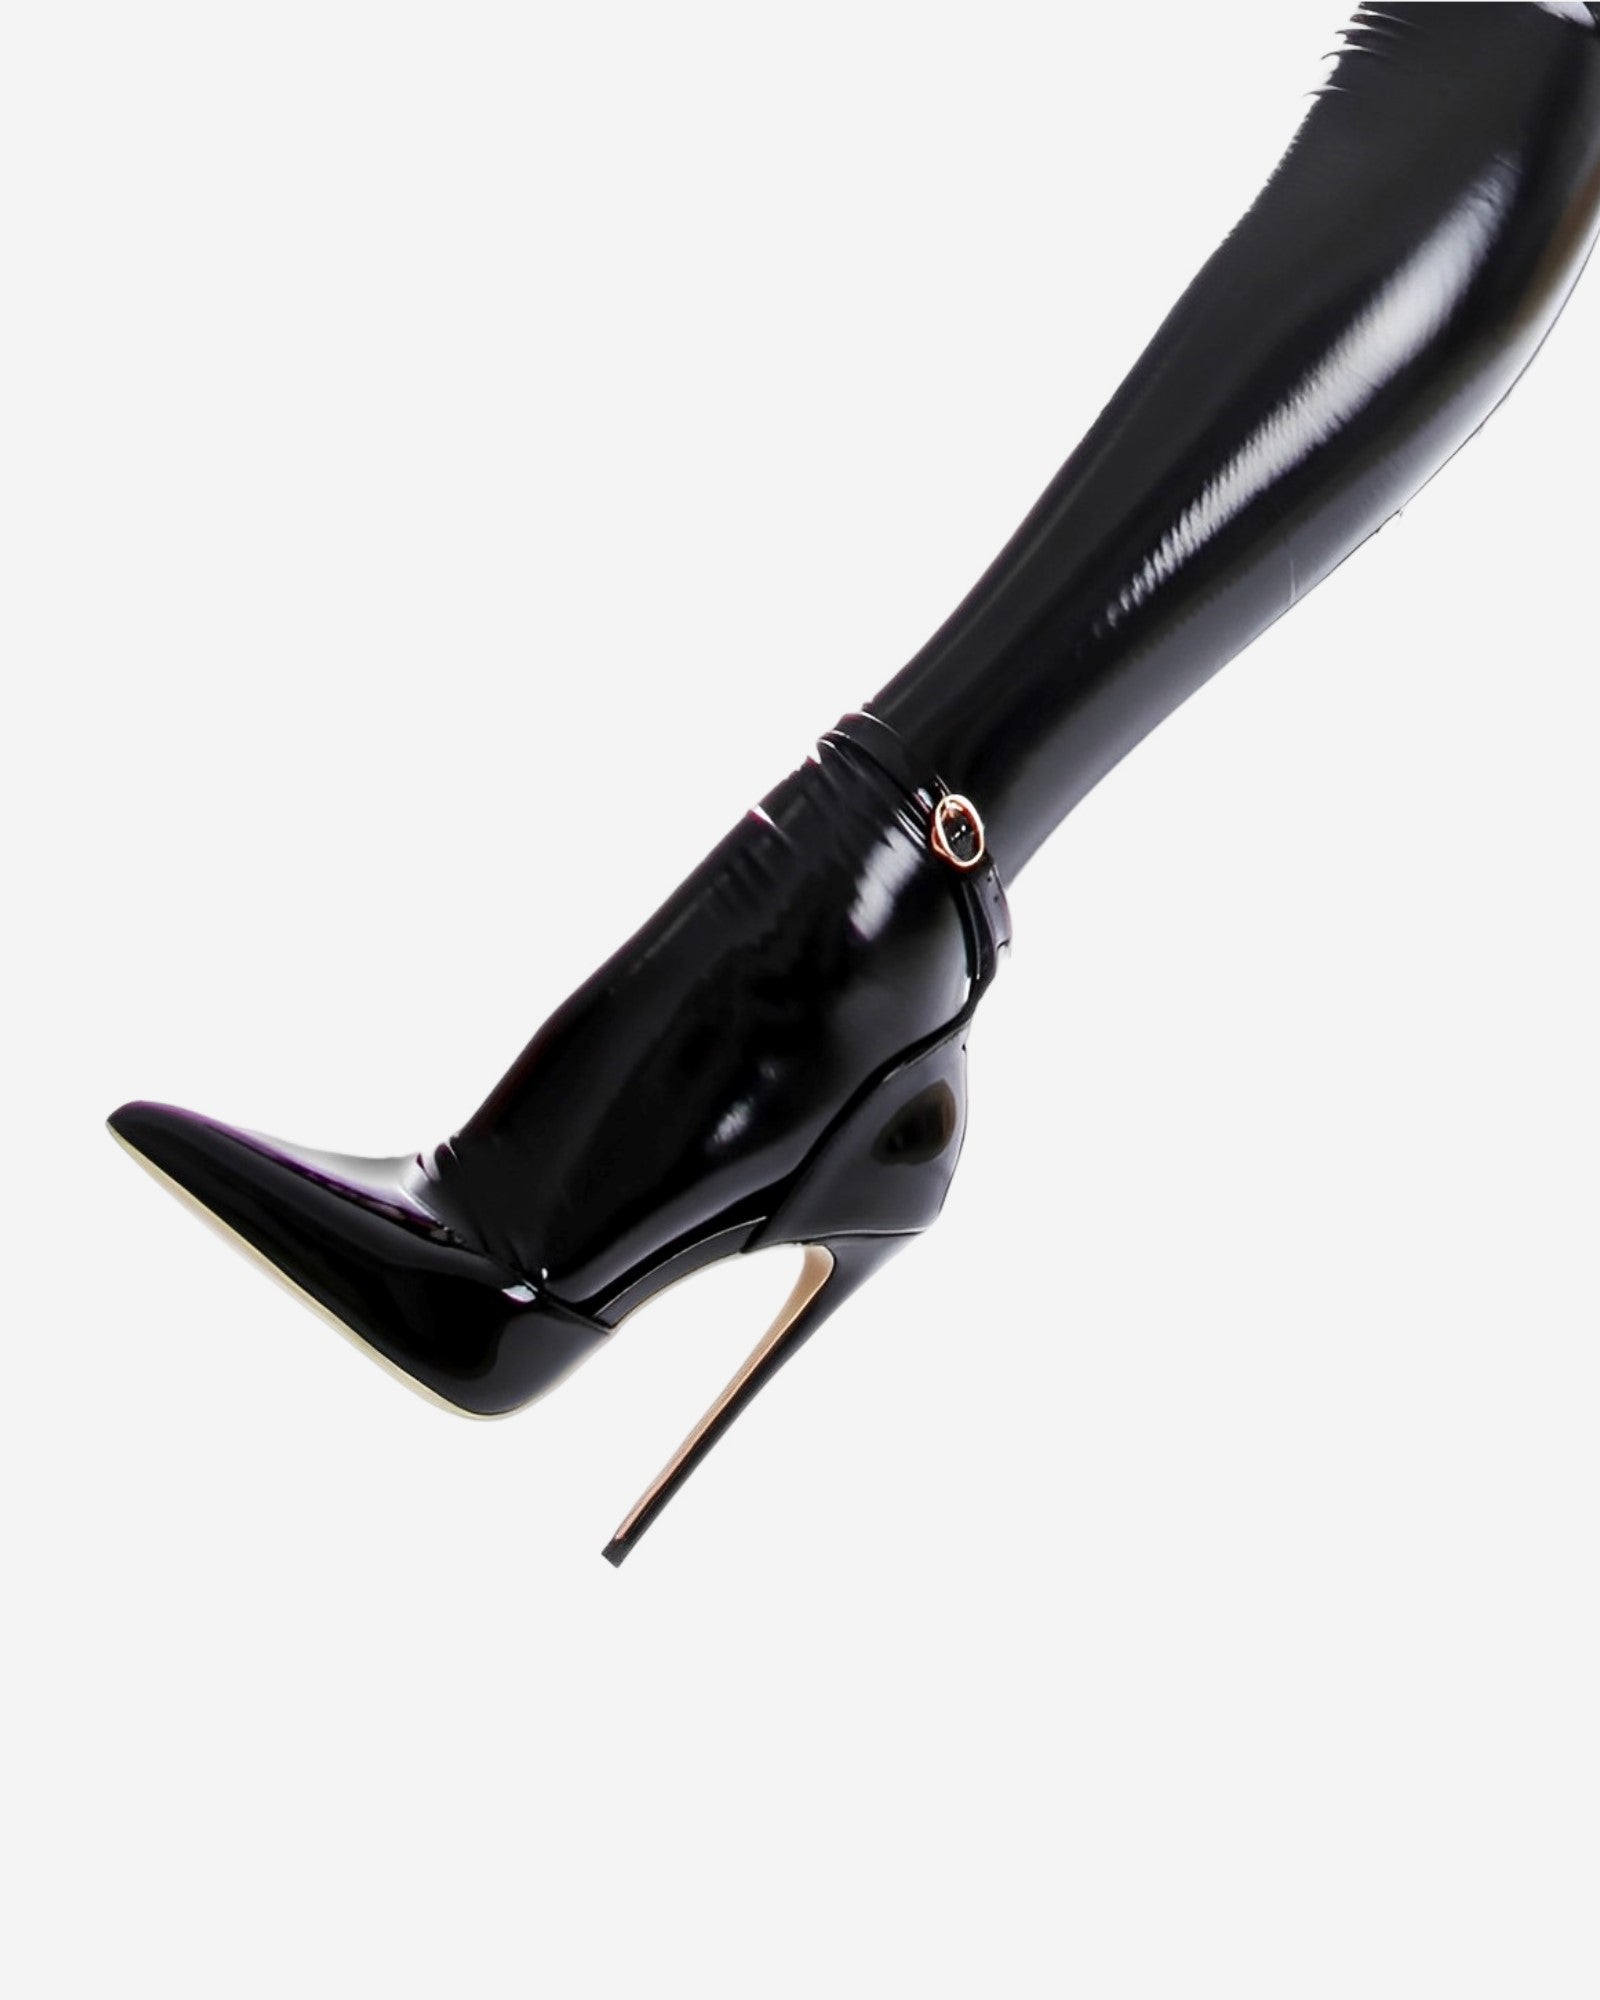 Fetish stiletto high heel leather sandals, thin and stylish heel